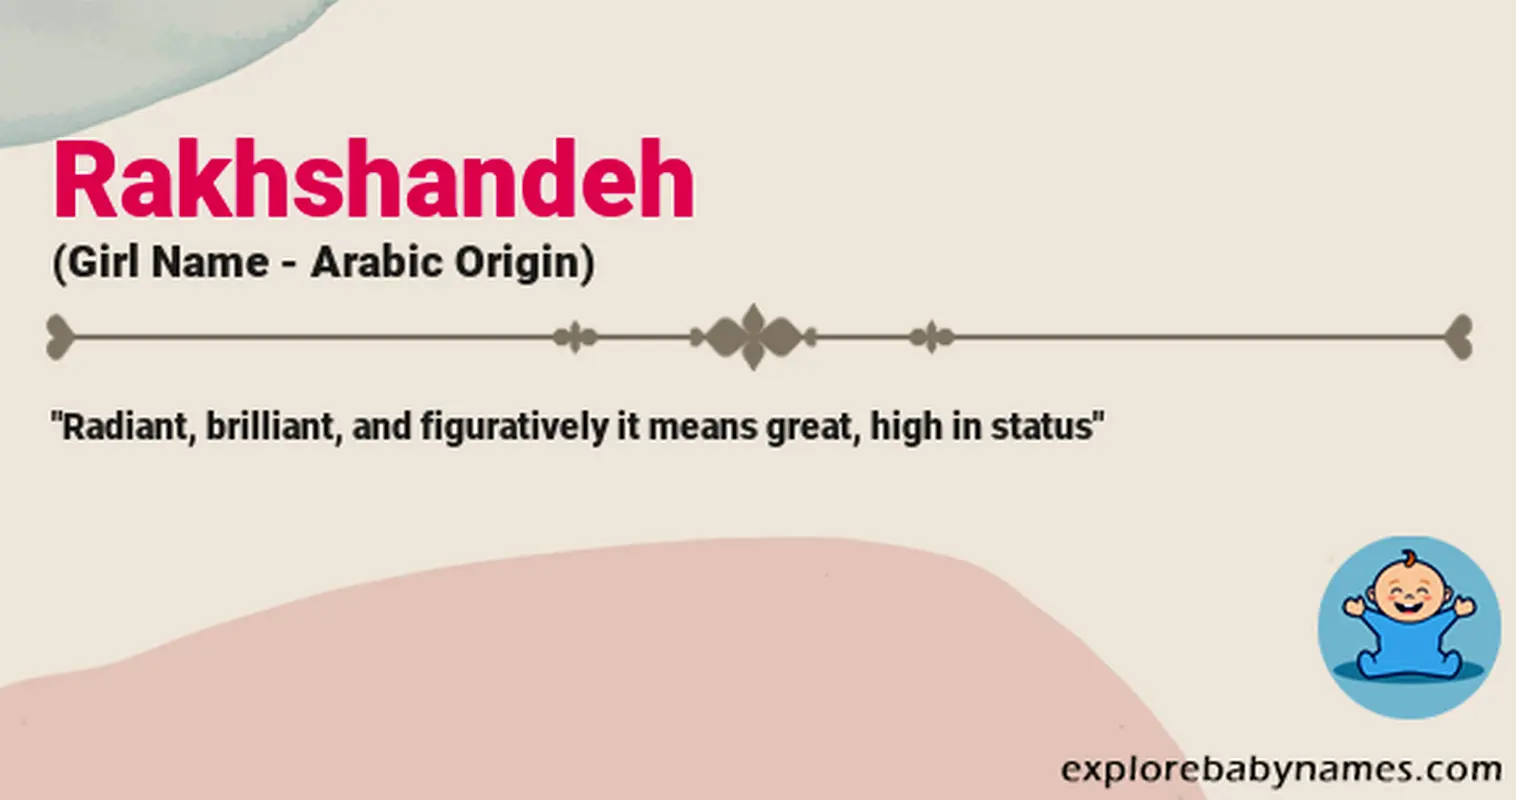 Meaning of Rakhshandeh